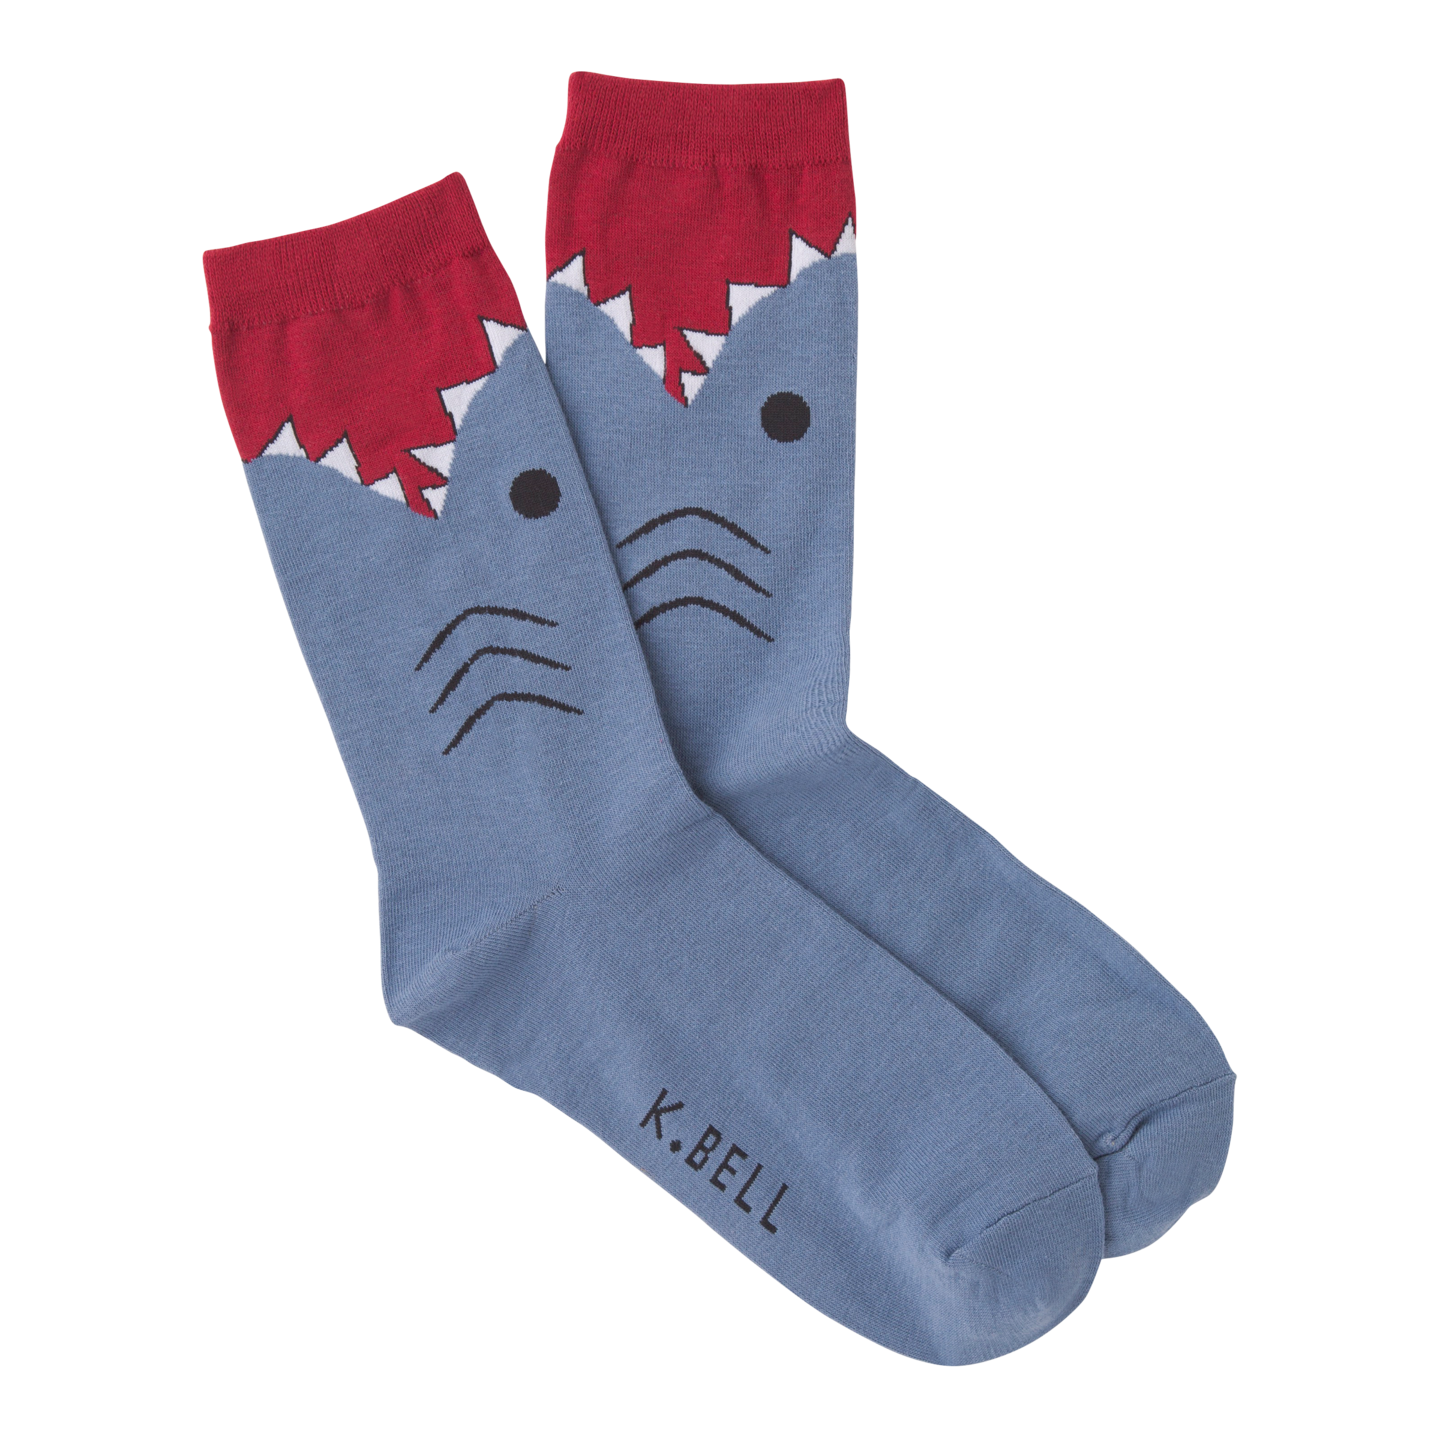 Shark Sock crew socks